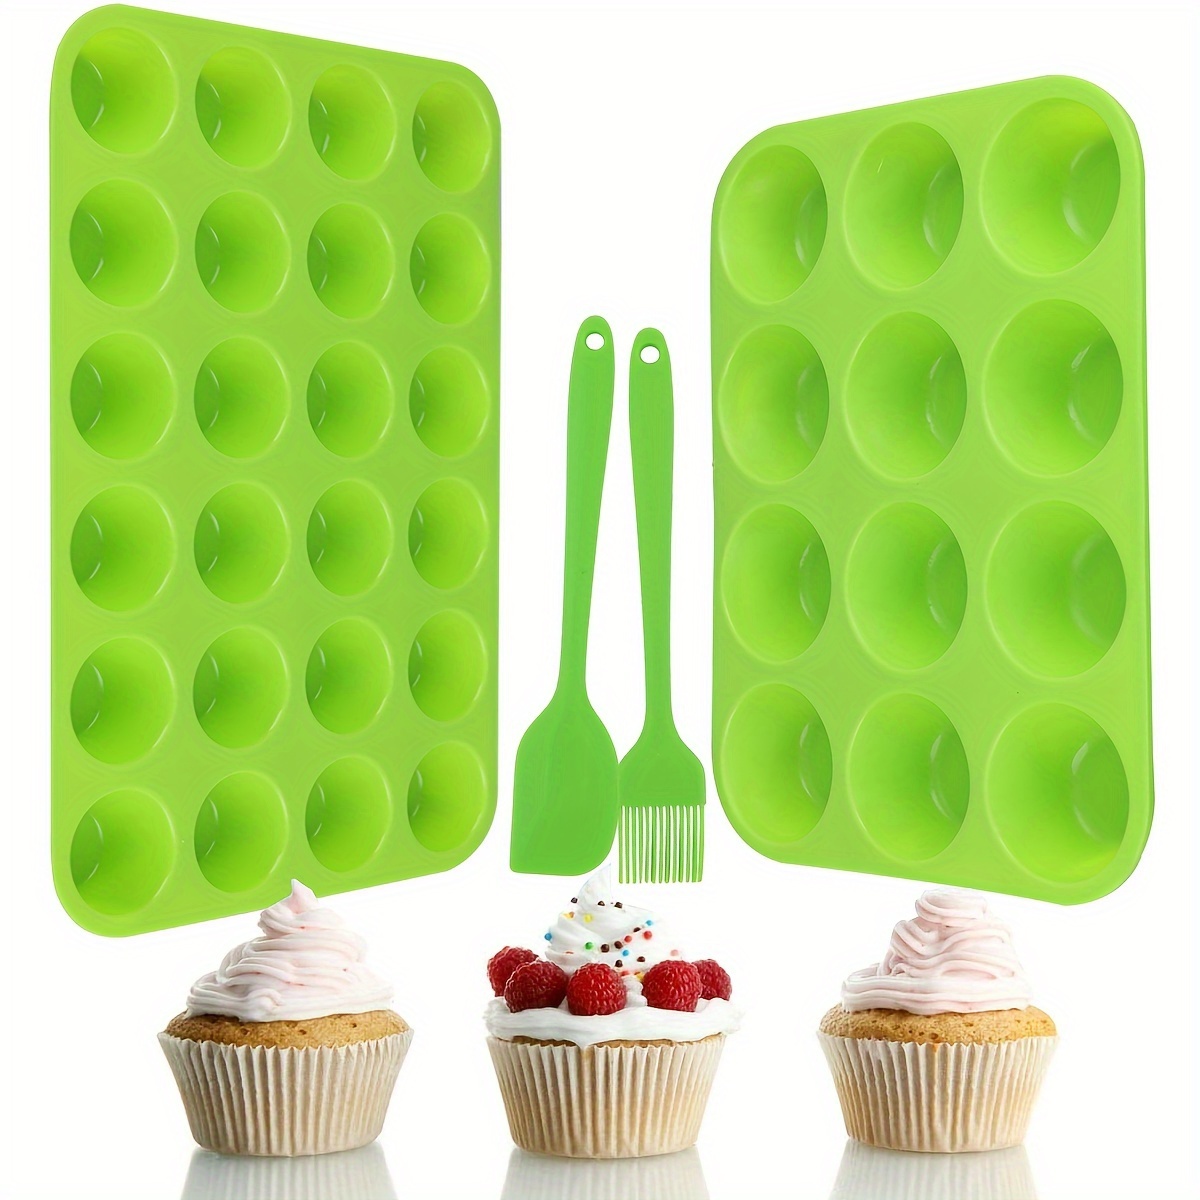 Non-stick Silicone Mini Muffin And Cupcake Pan 24 Cup Bpa Free